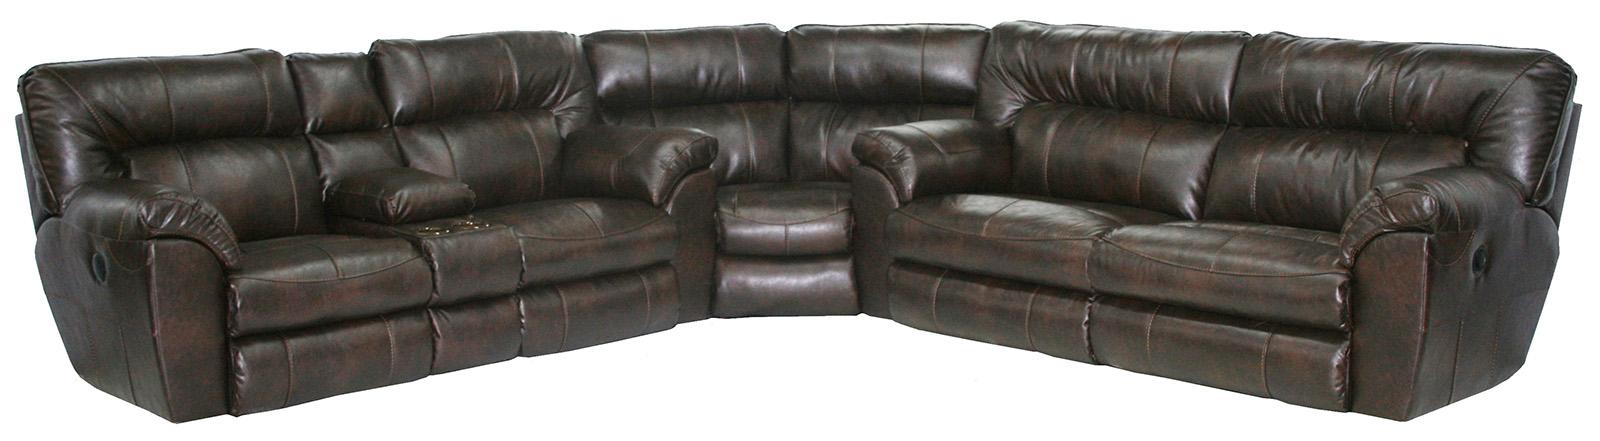 Catnapper Nolan Power Extra Wide Reclining Sofa in Godiva